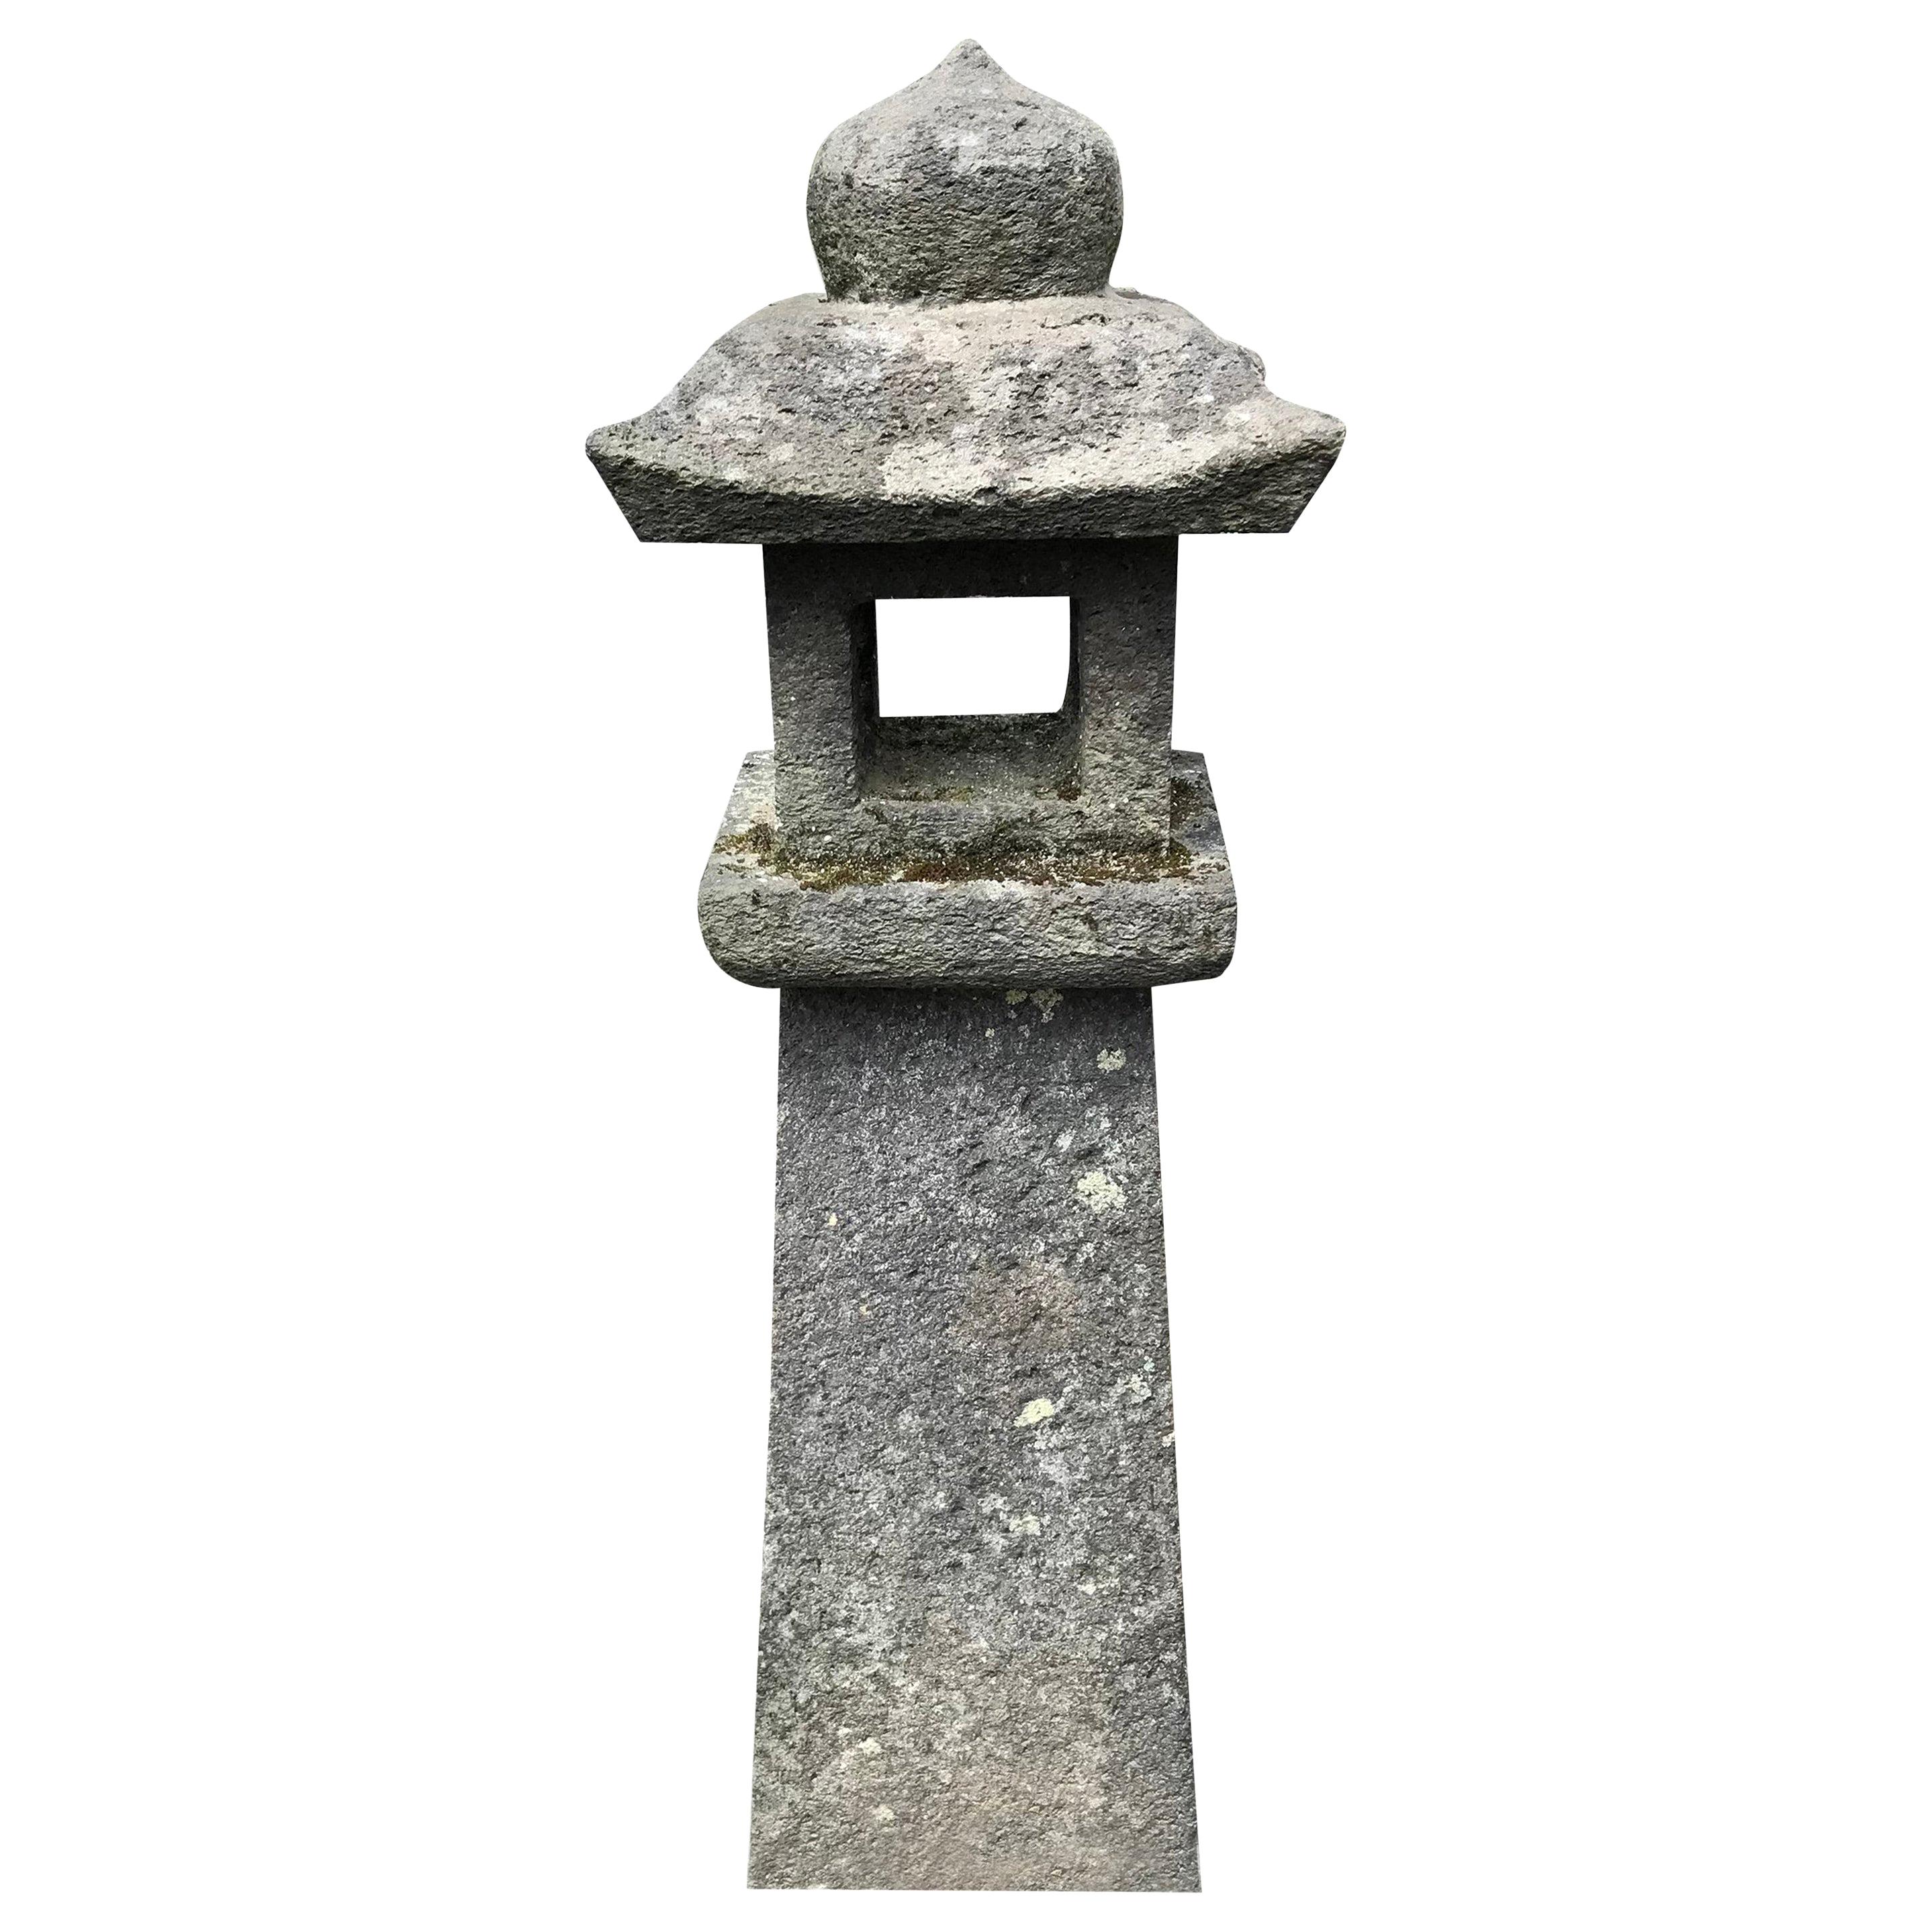 Japanese Pair (2) of Antique Stone "Pathway Lanterns", 19th Century